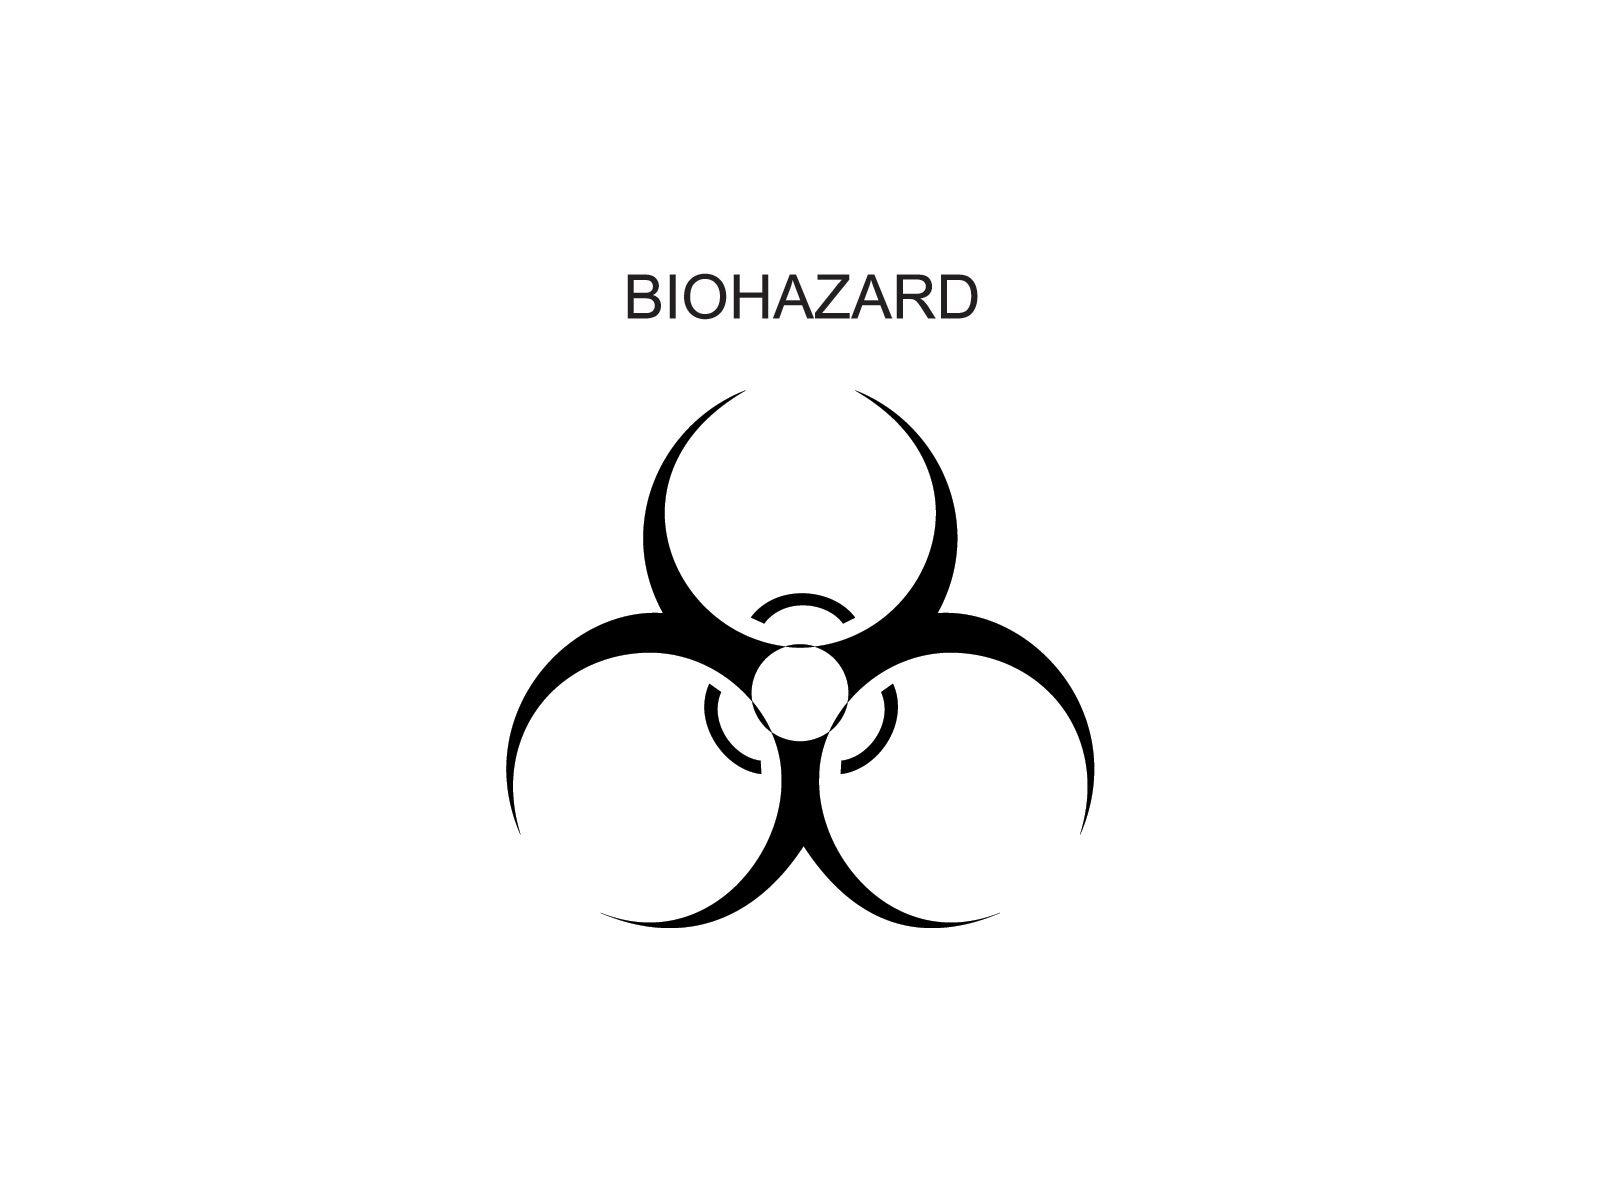 Rock and Metal Band Logo - Biohazard logo | Band logos - Rock band logos, metal bands logos ...